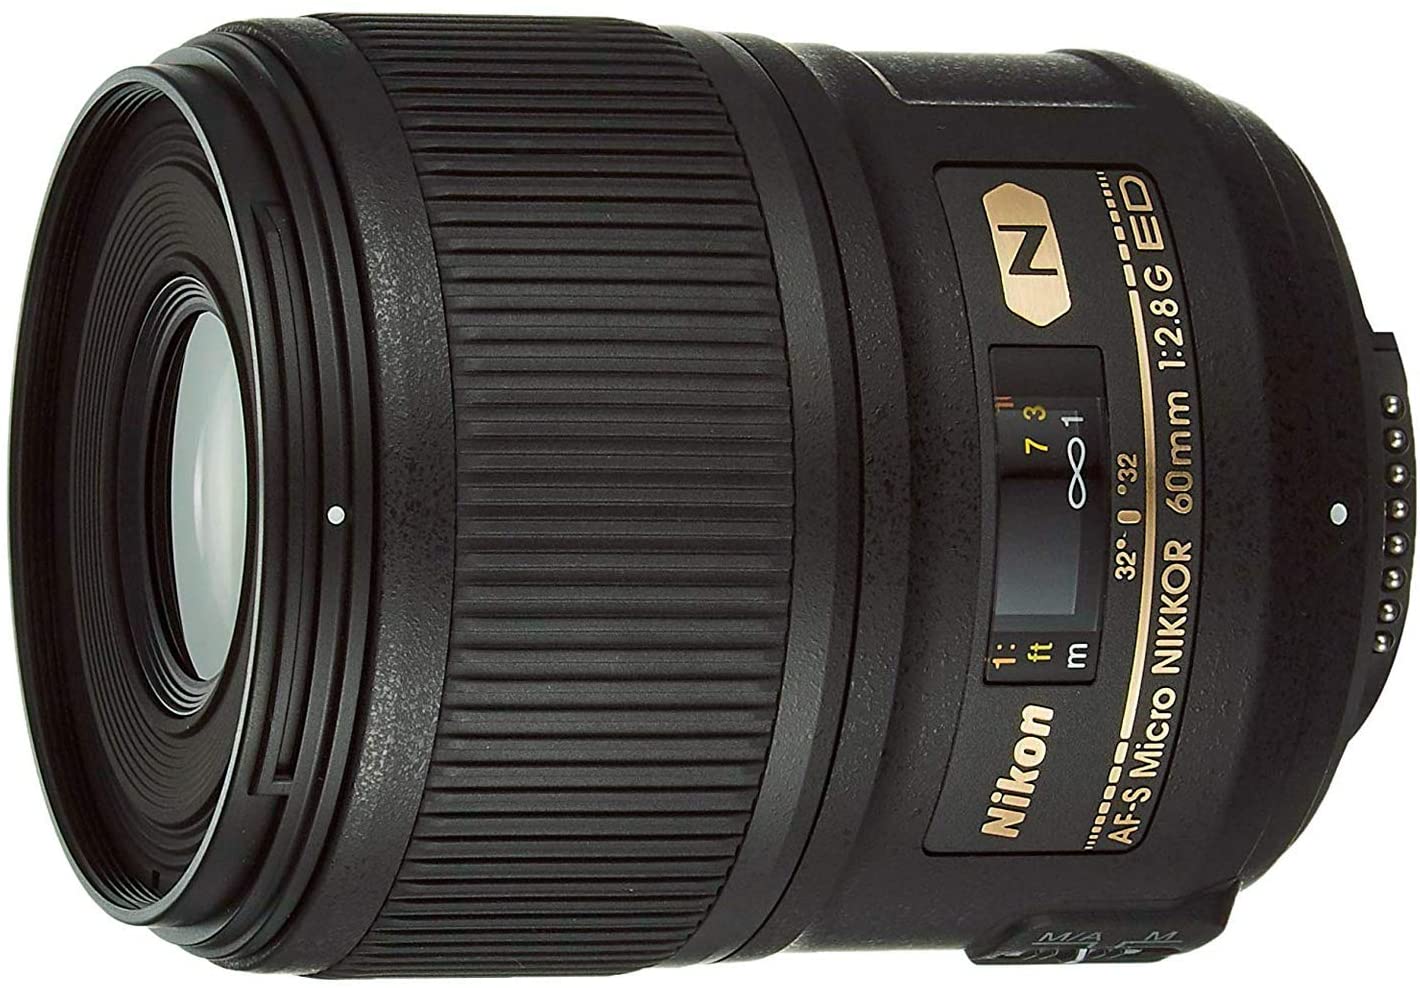 Nikon single focus micro lens AF-S Micro 60mm f / 2.8G ED full